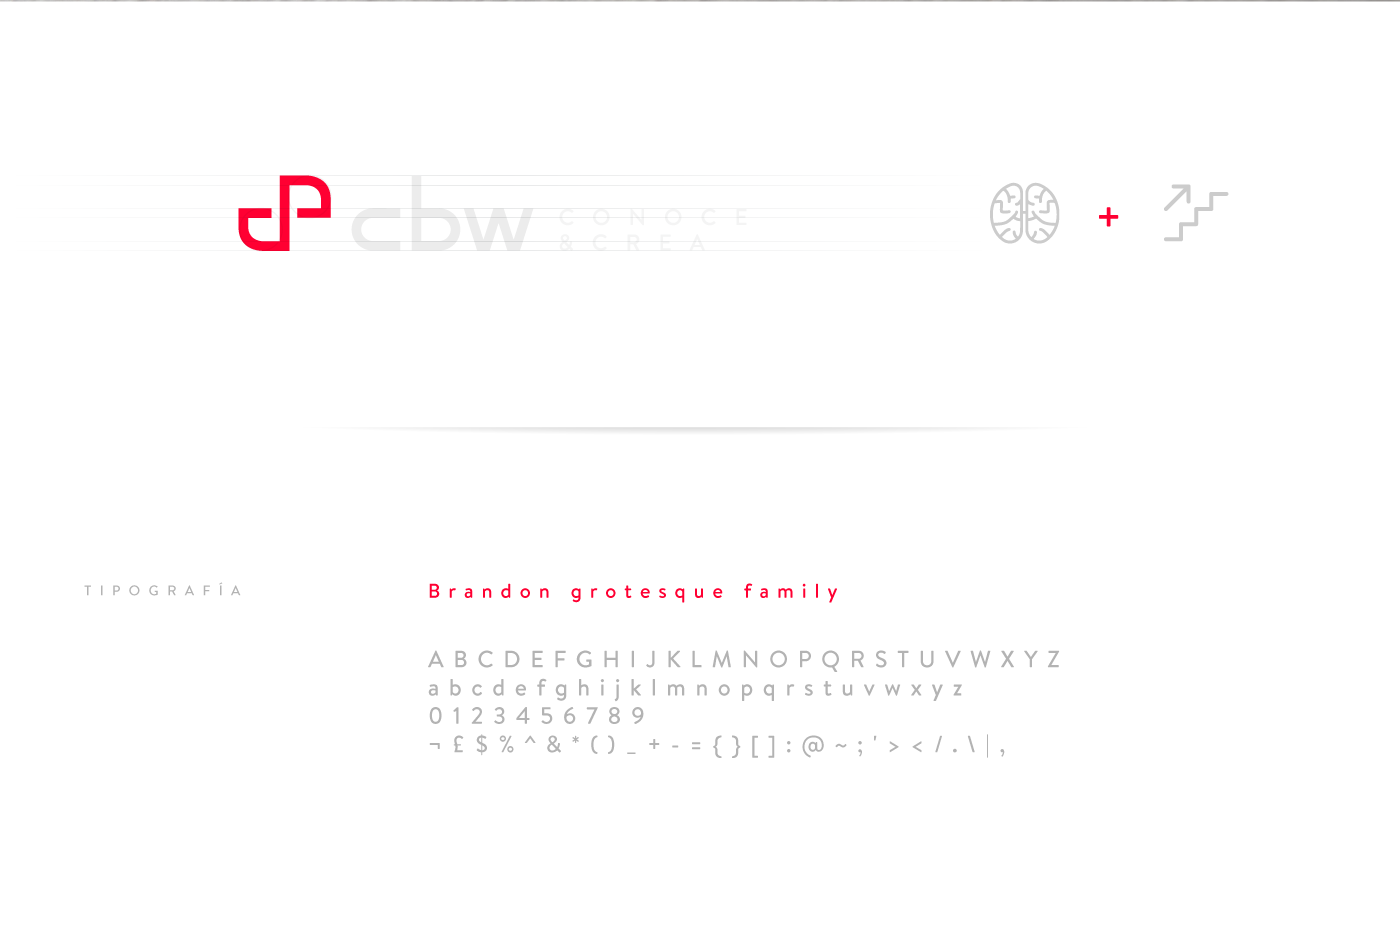 cbw agency Latin America brand identity medellin colombia agencia logo imagotipo agencies brands studio brands